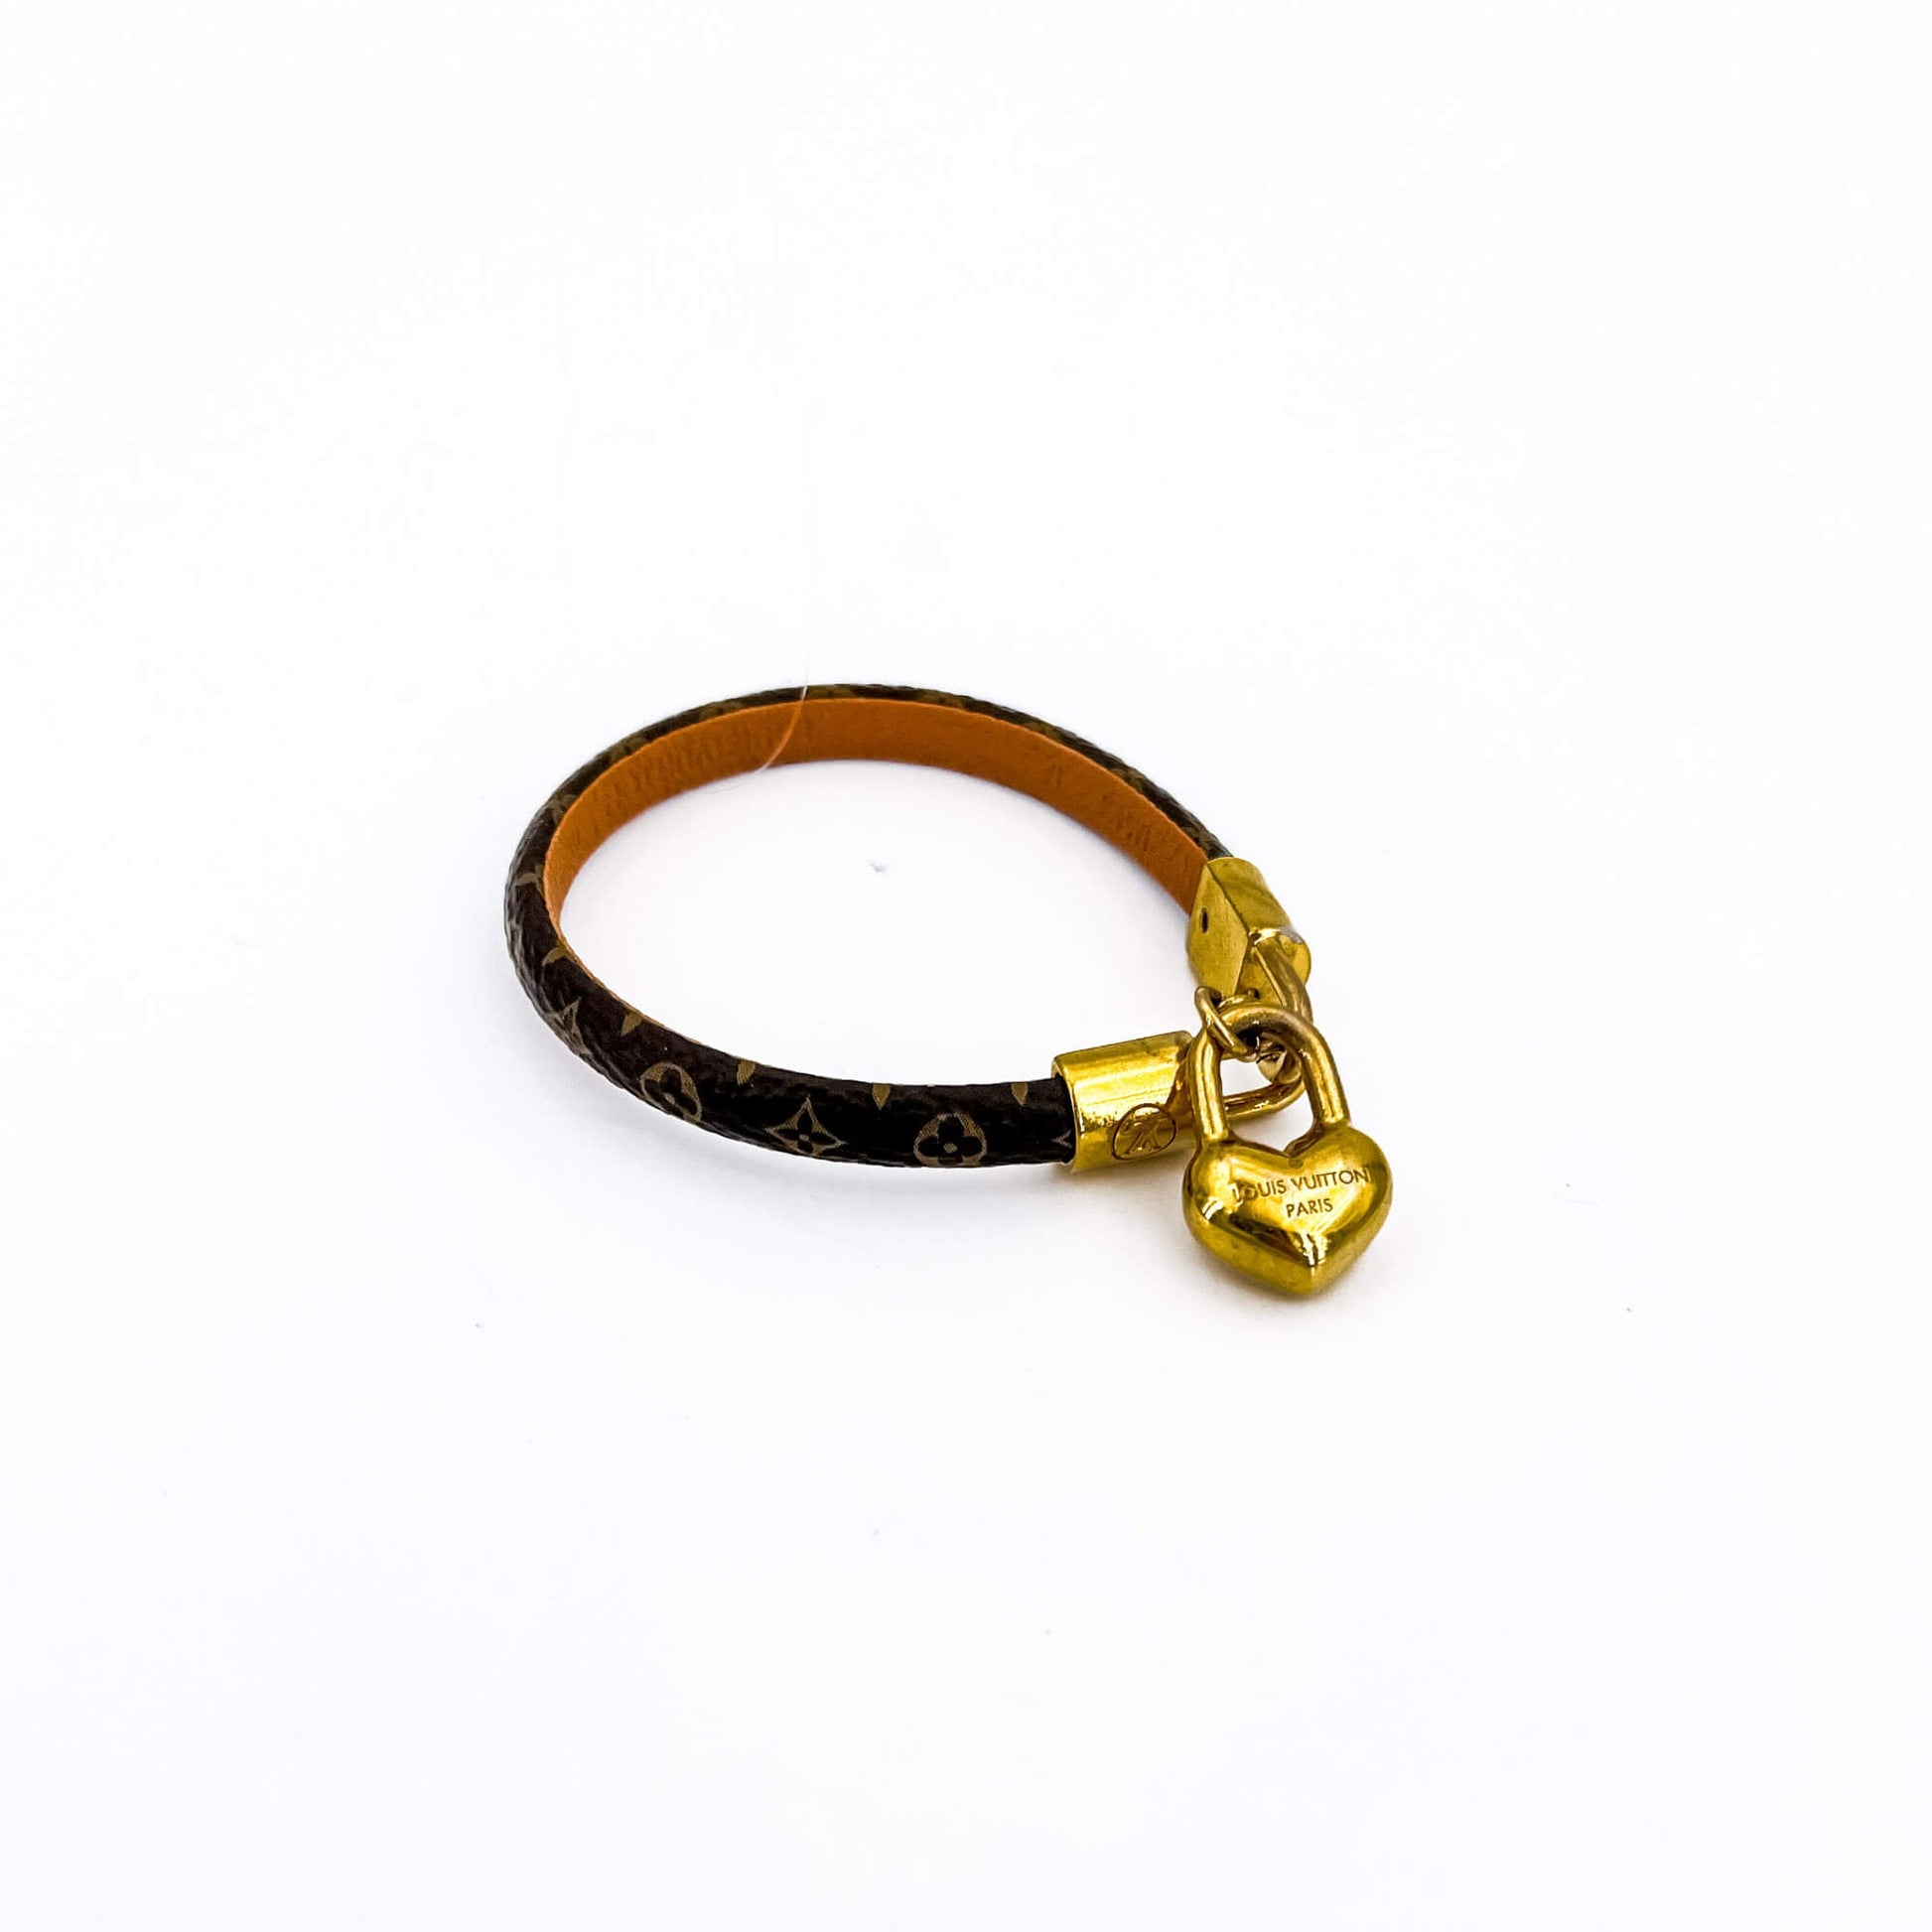 Shop Louis Vuitton MONOGRAM Crazy in lock bracelet (M6451F) by sunnyfunny